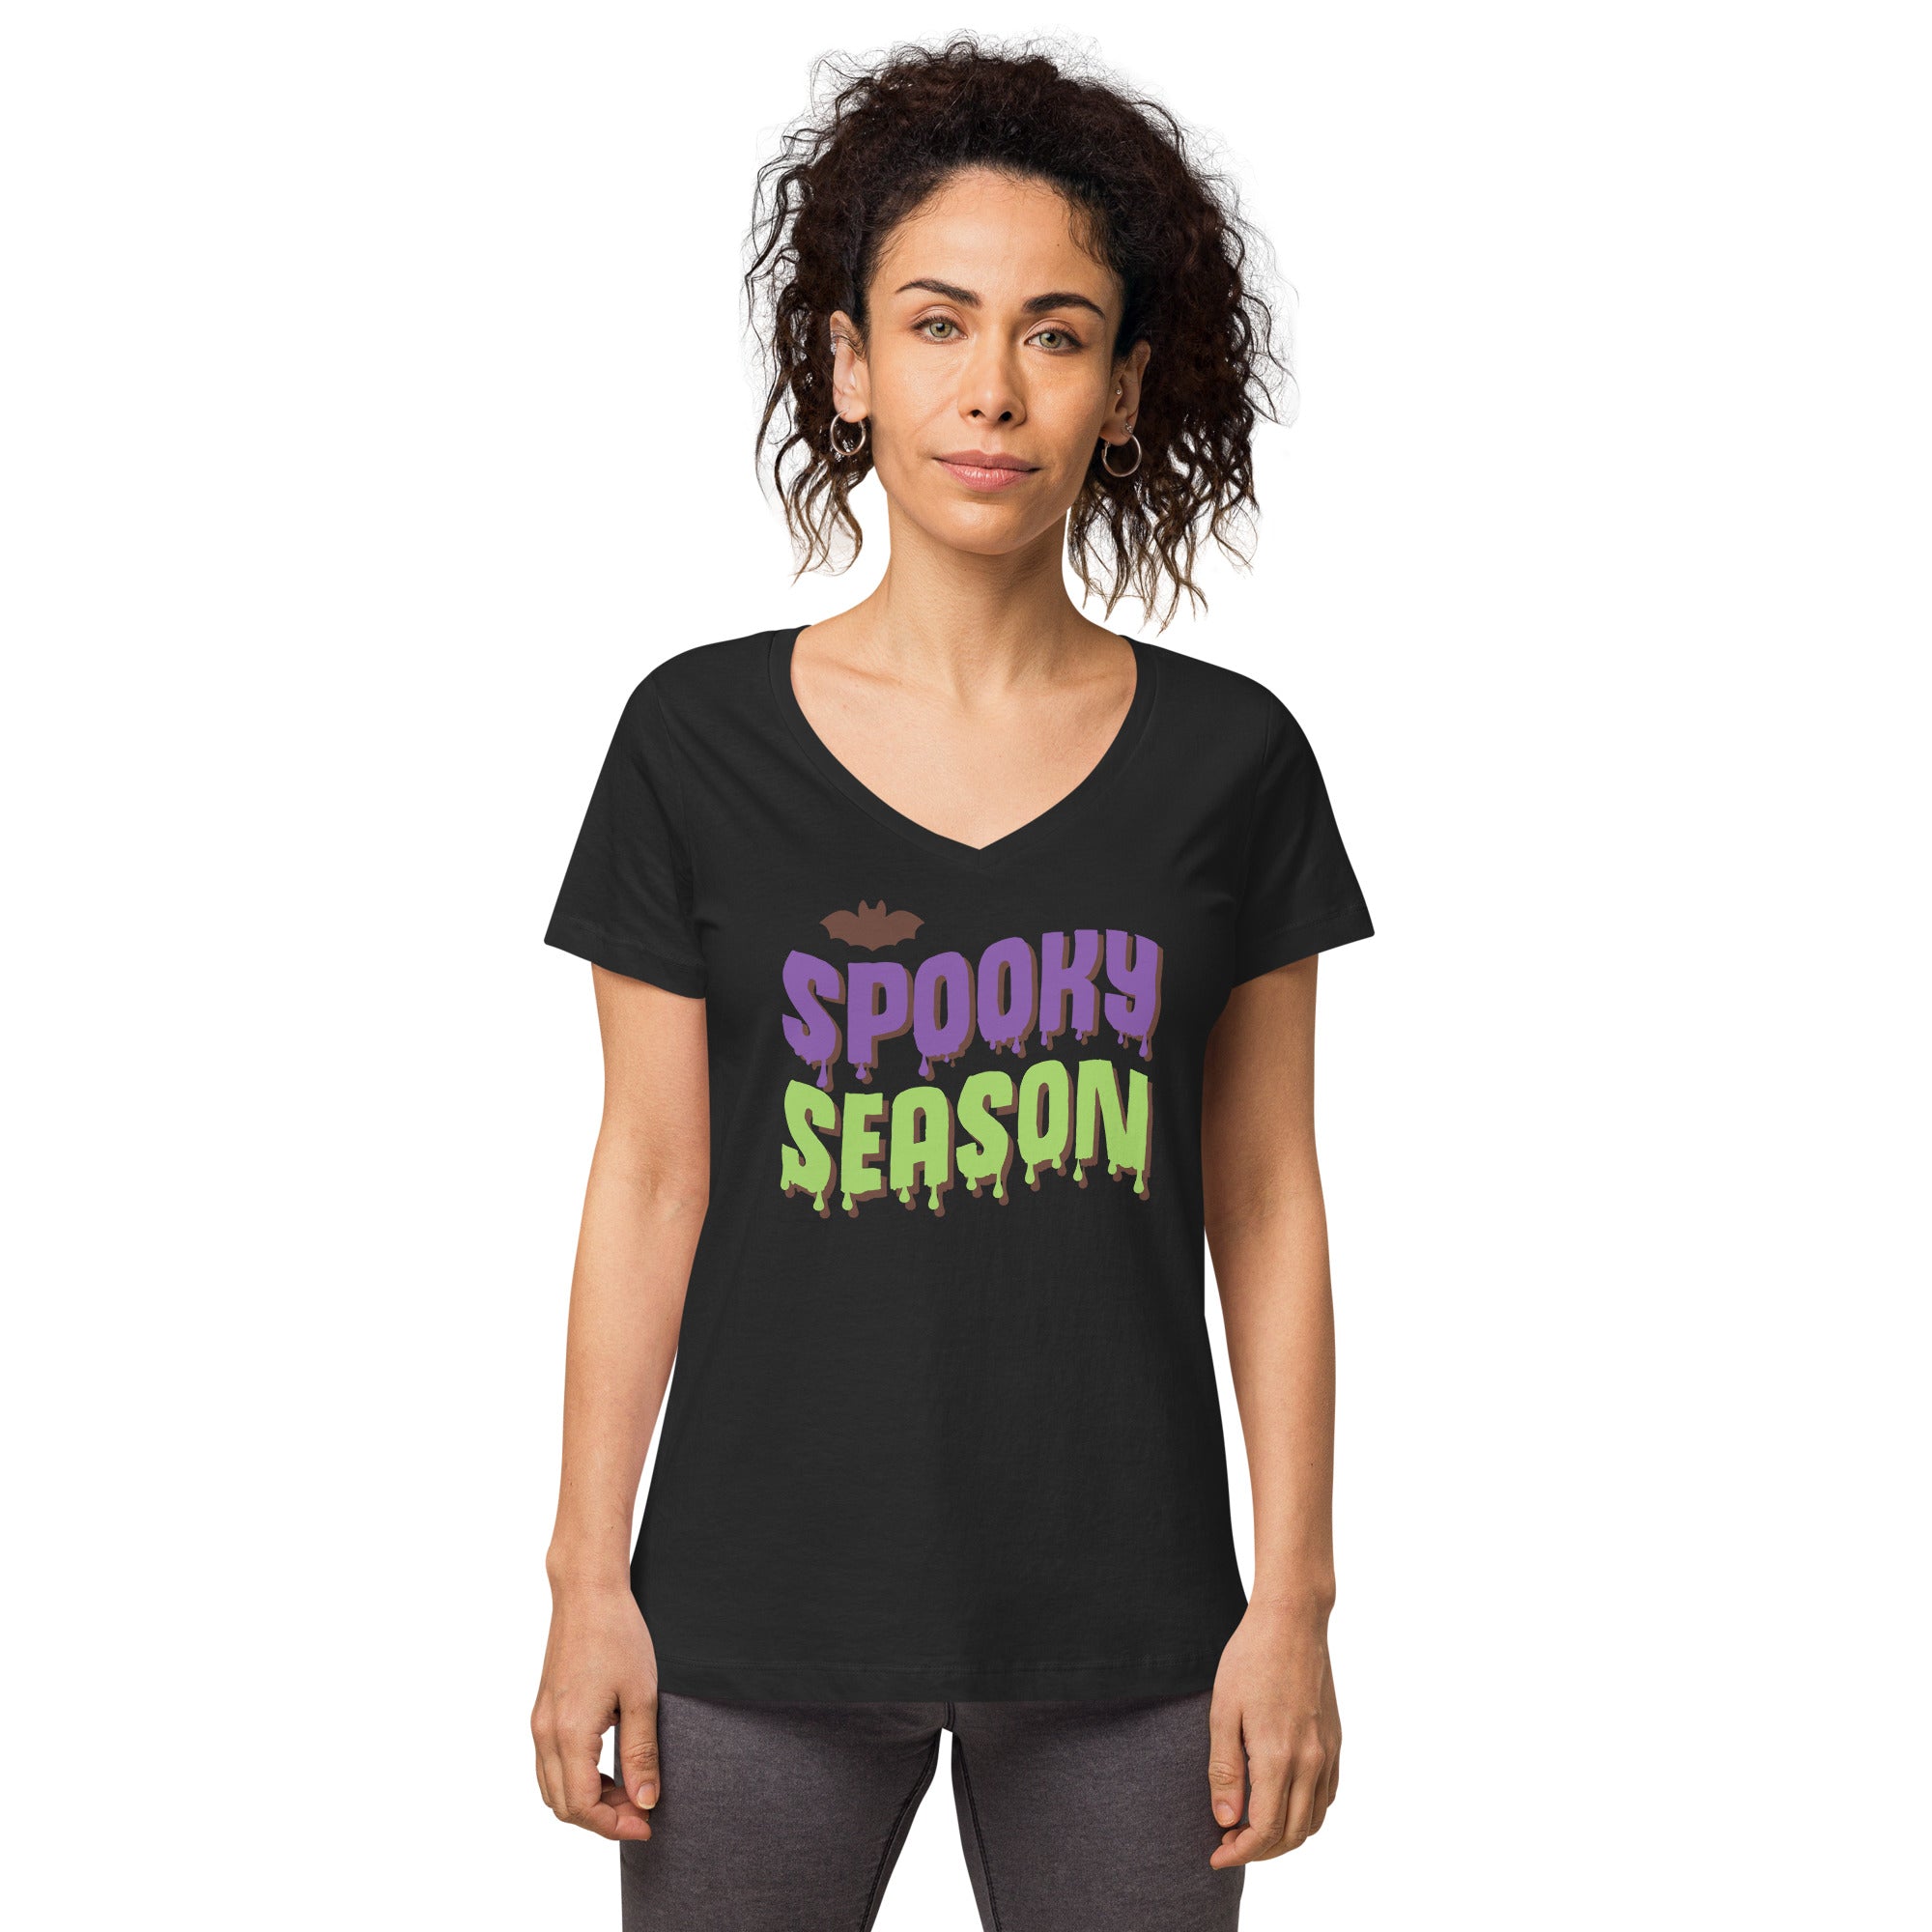 Spooky Season Shirt,Fall Shirt, Spooky Season Halloween Shirt, Halloween T-shirt, Halloween vibes, Women’s fitted v-neck t-shirt